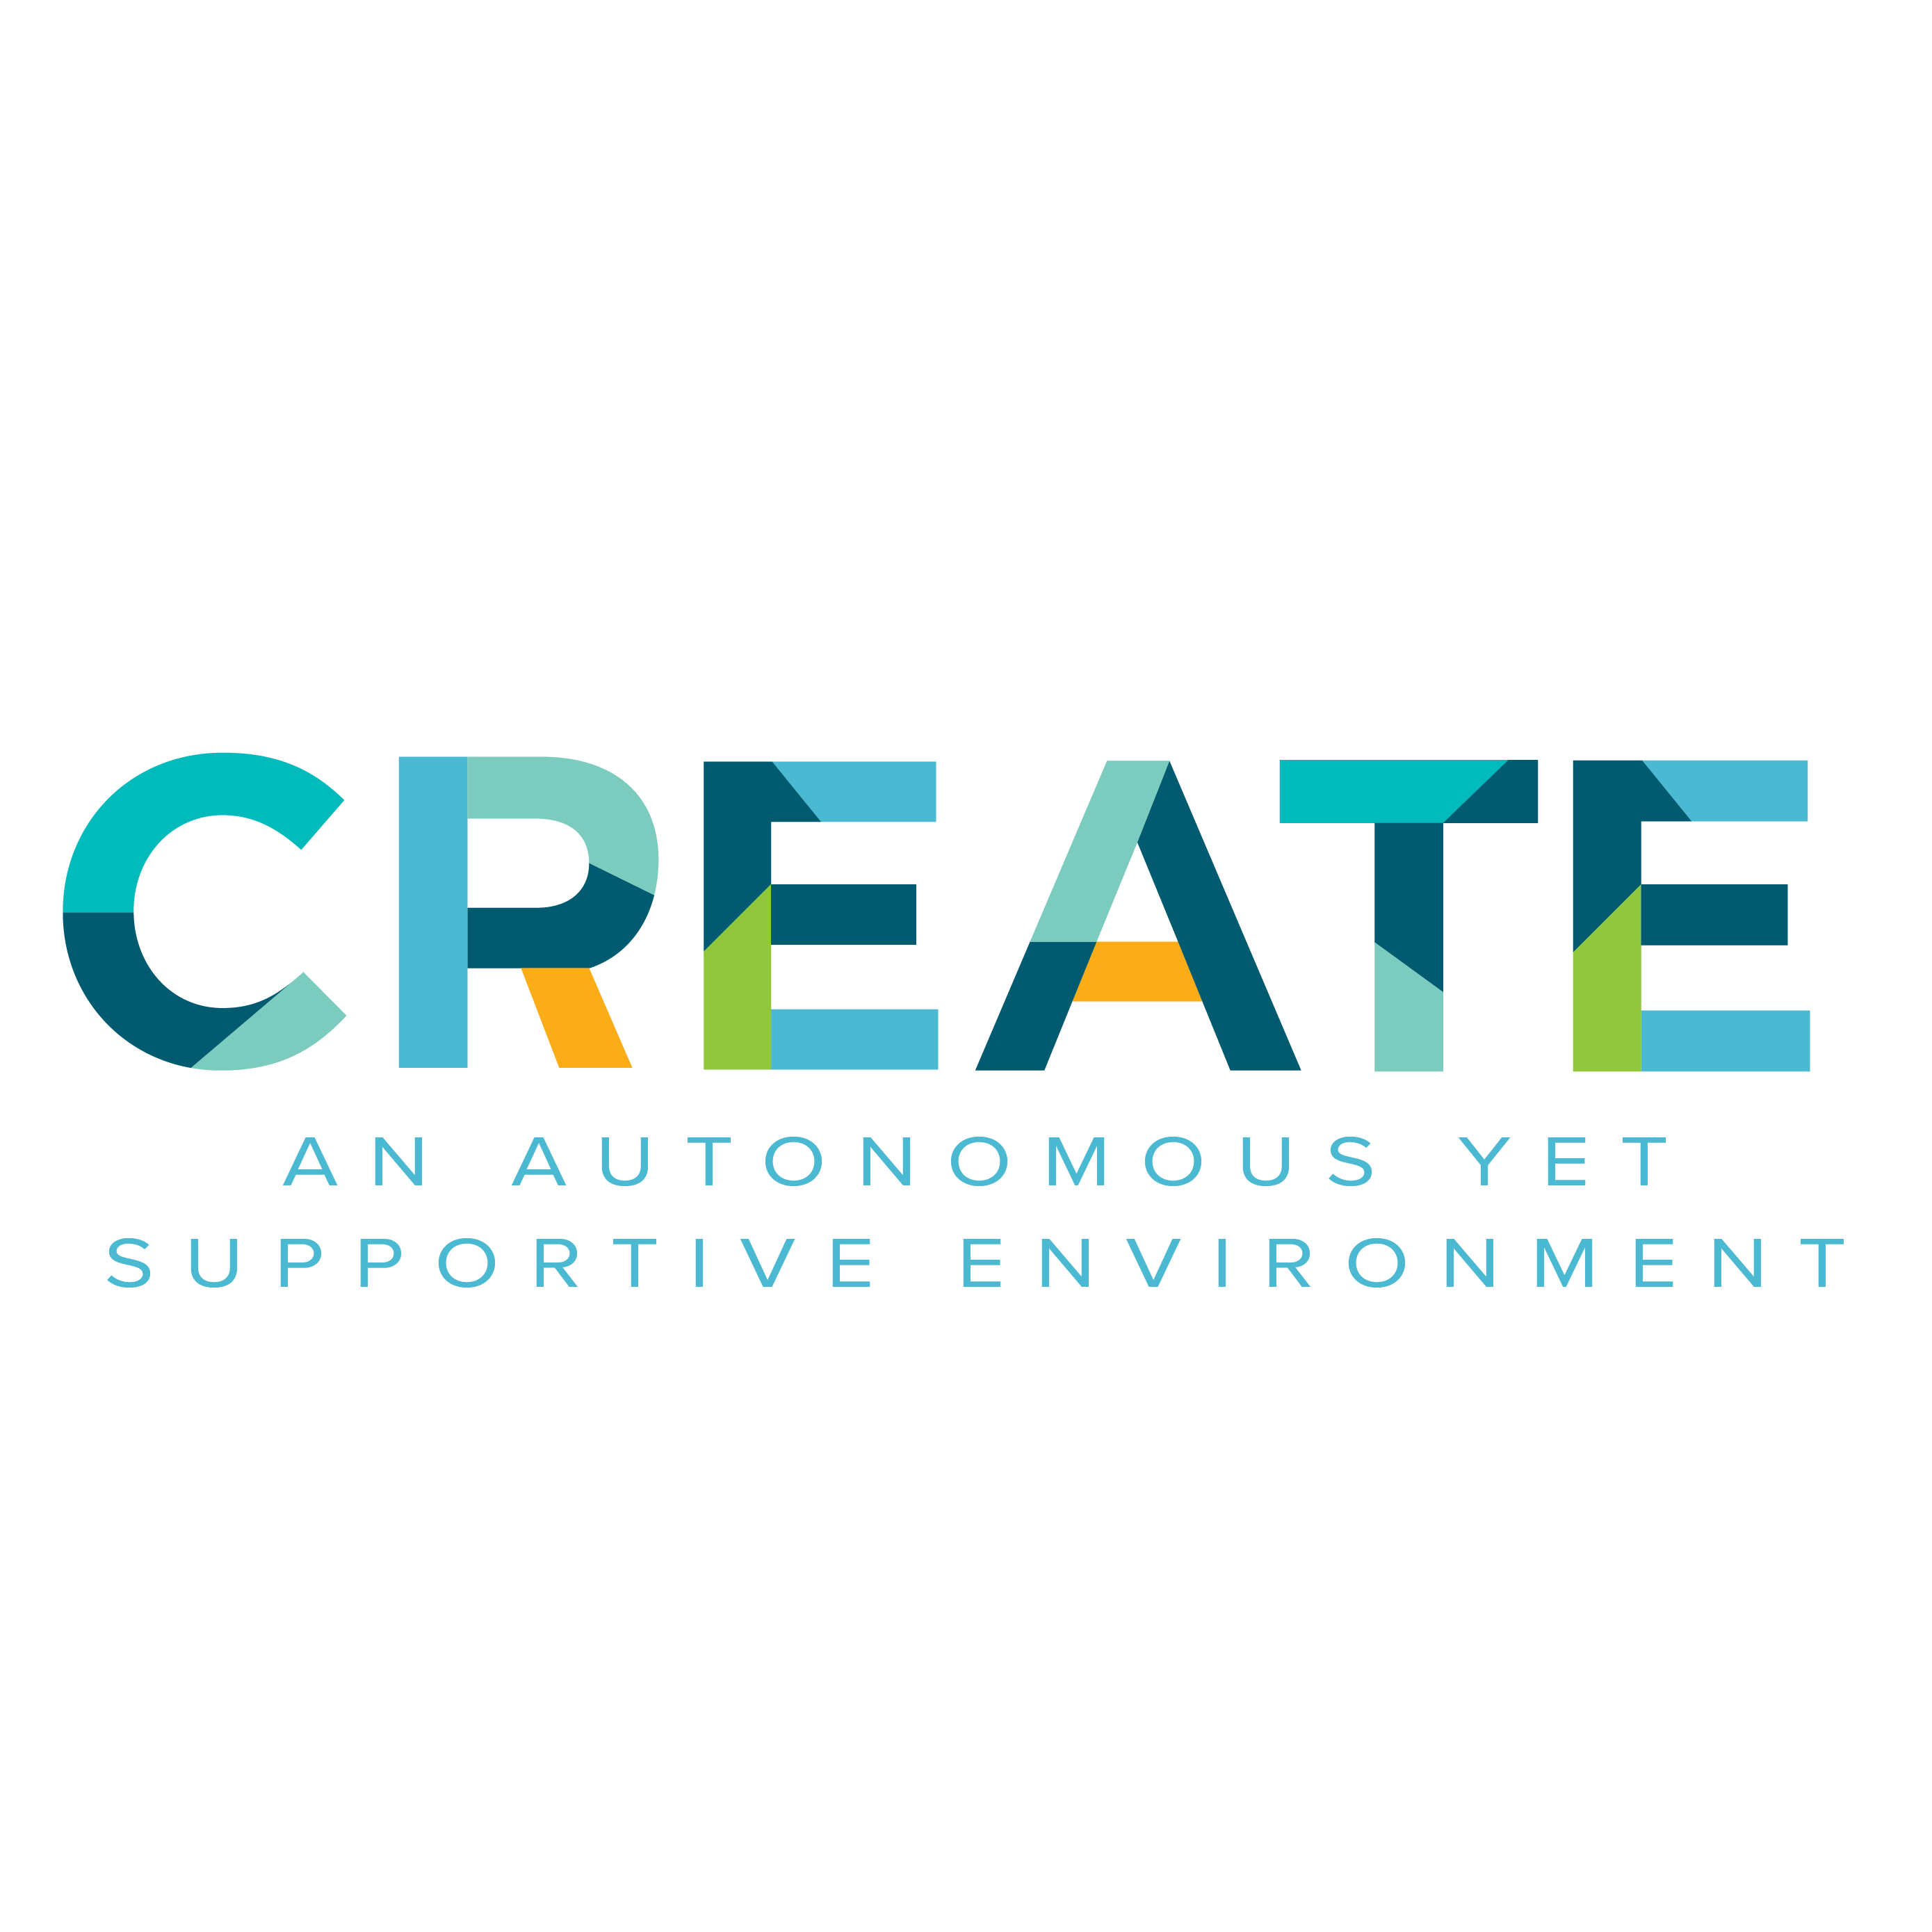 Create an autonomous yet supportive environment